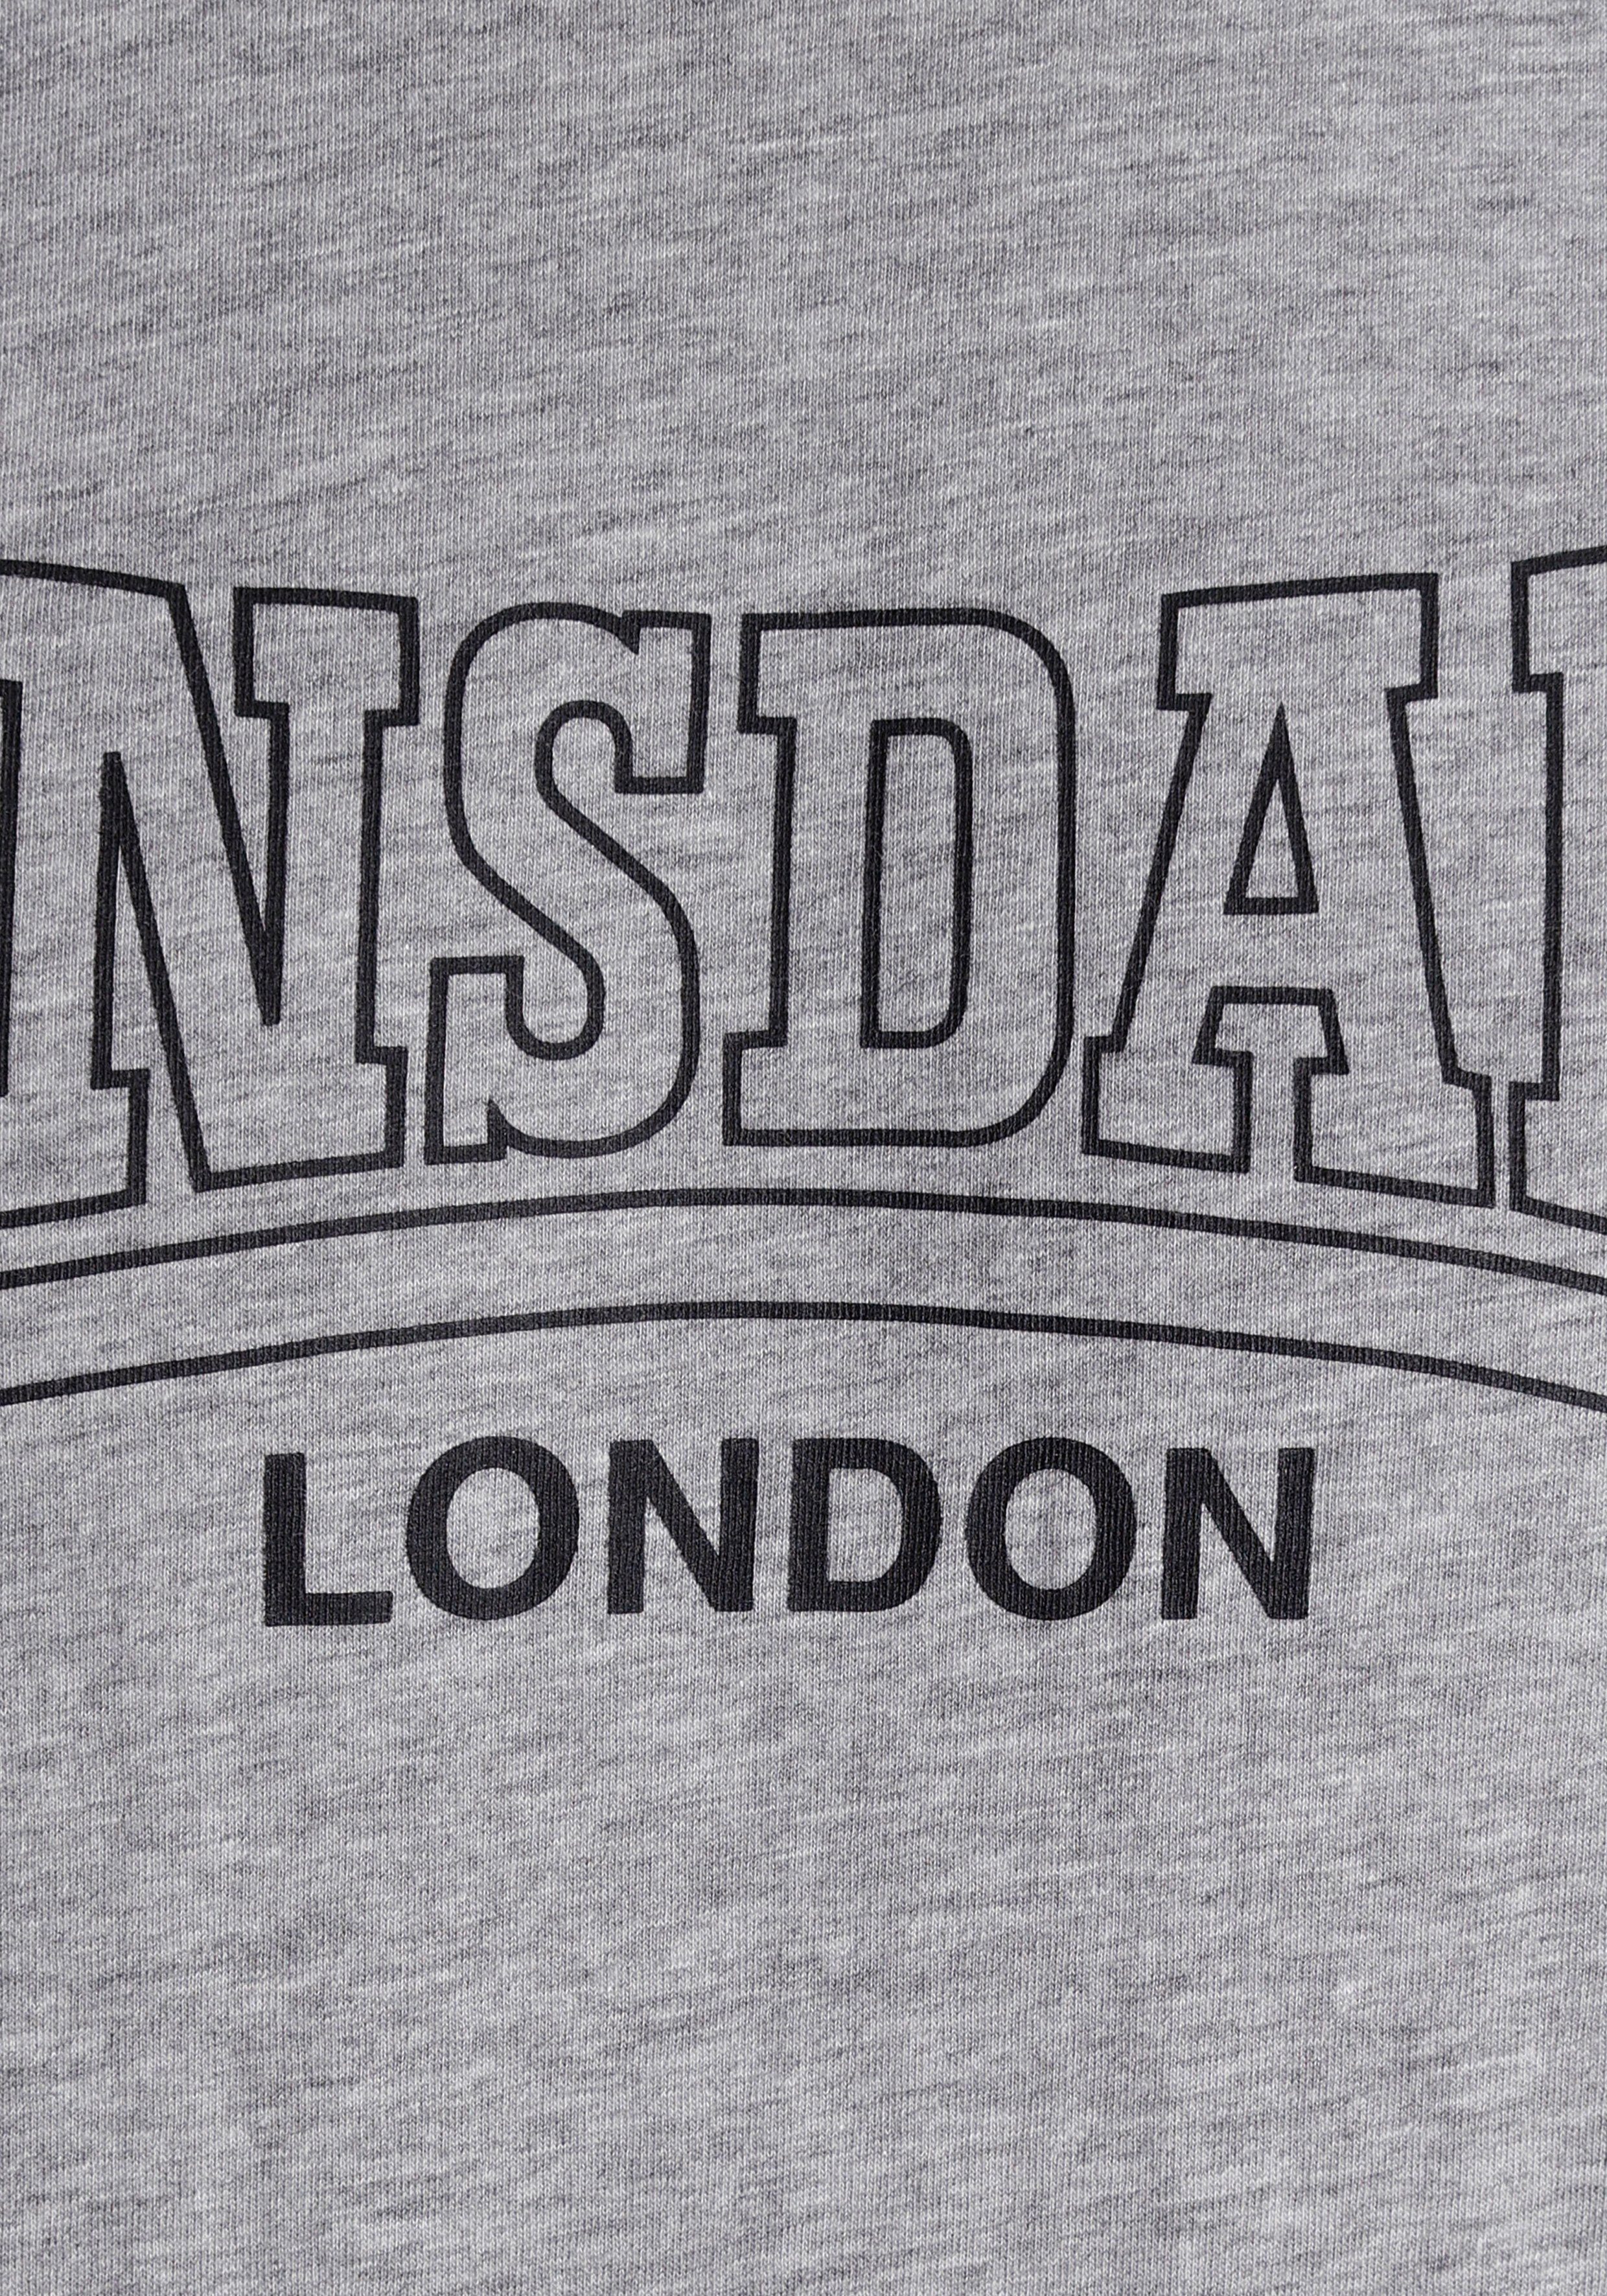 T-Shirt Lonsdale